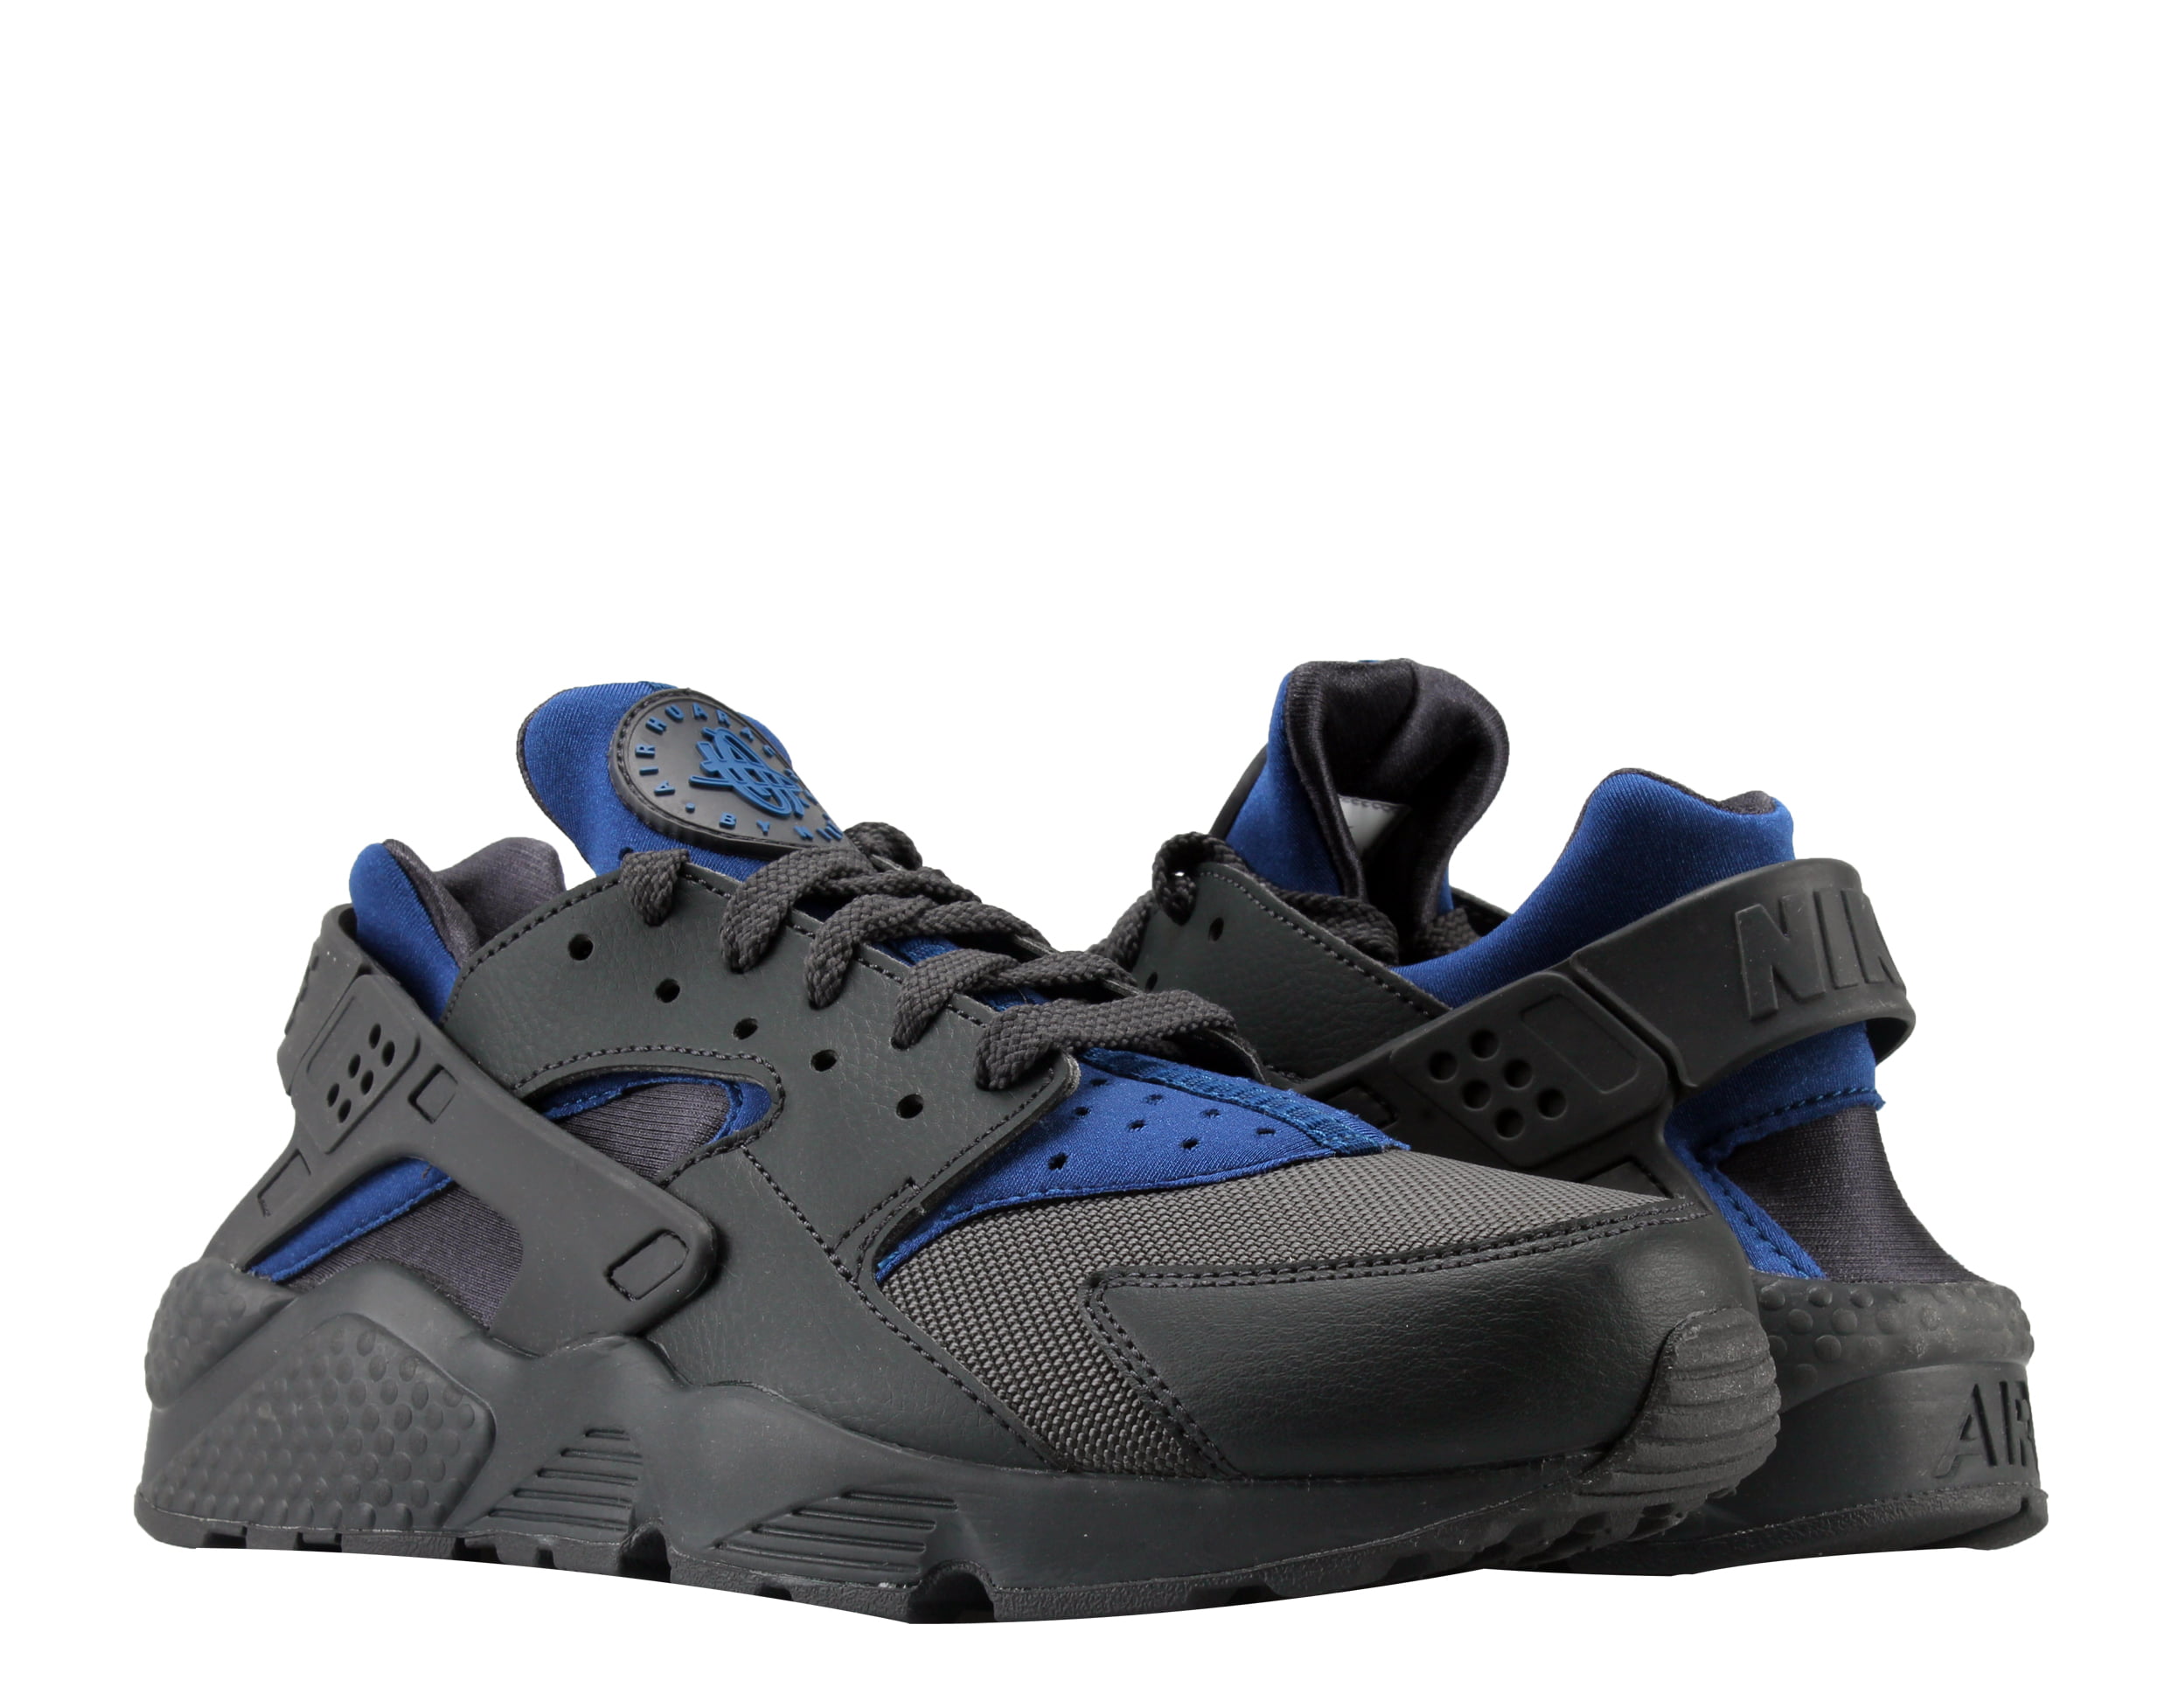 nacimiento Santuario emparedado Nike Air Huarache Men's Running Shoes Size 12 - Walmart.com